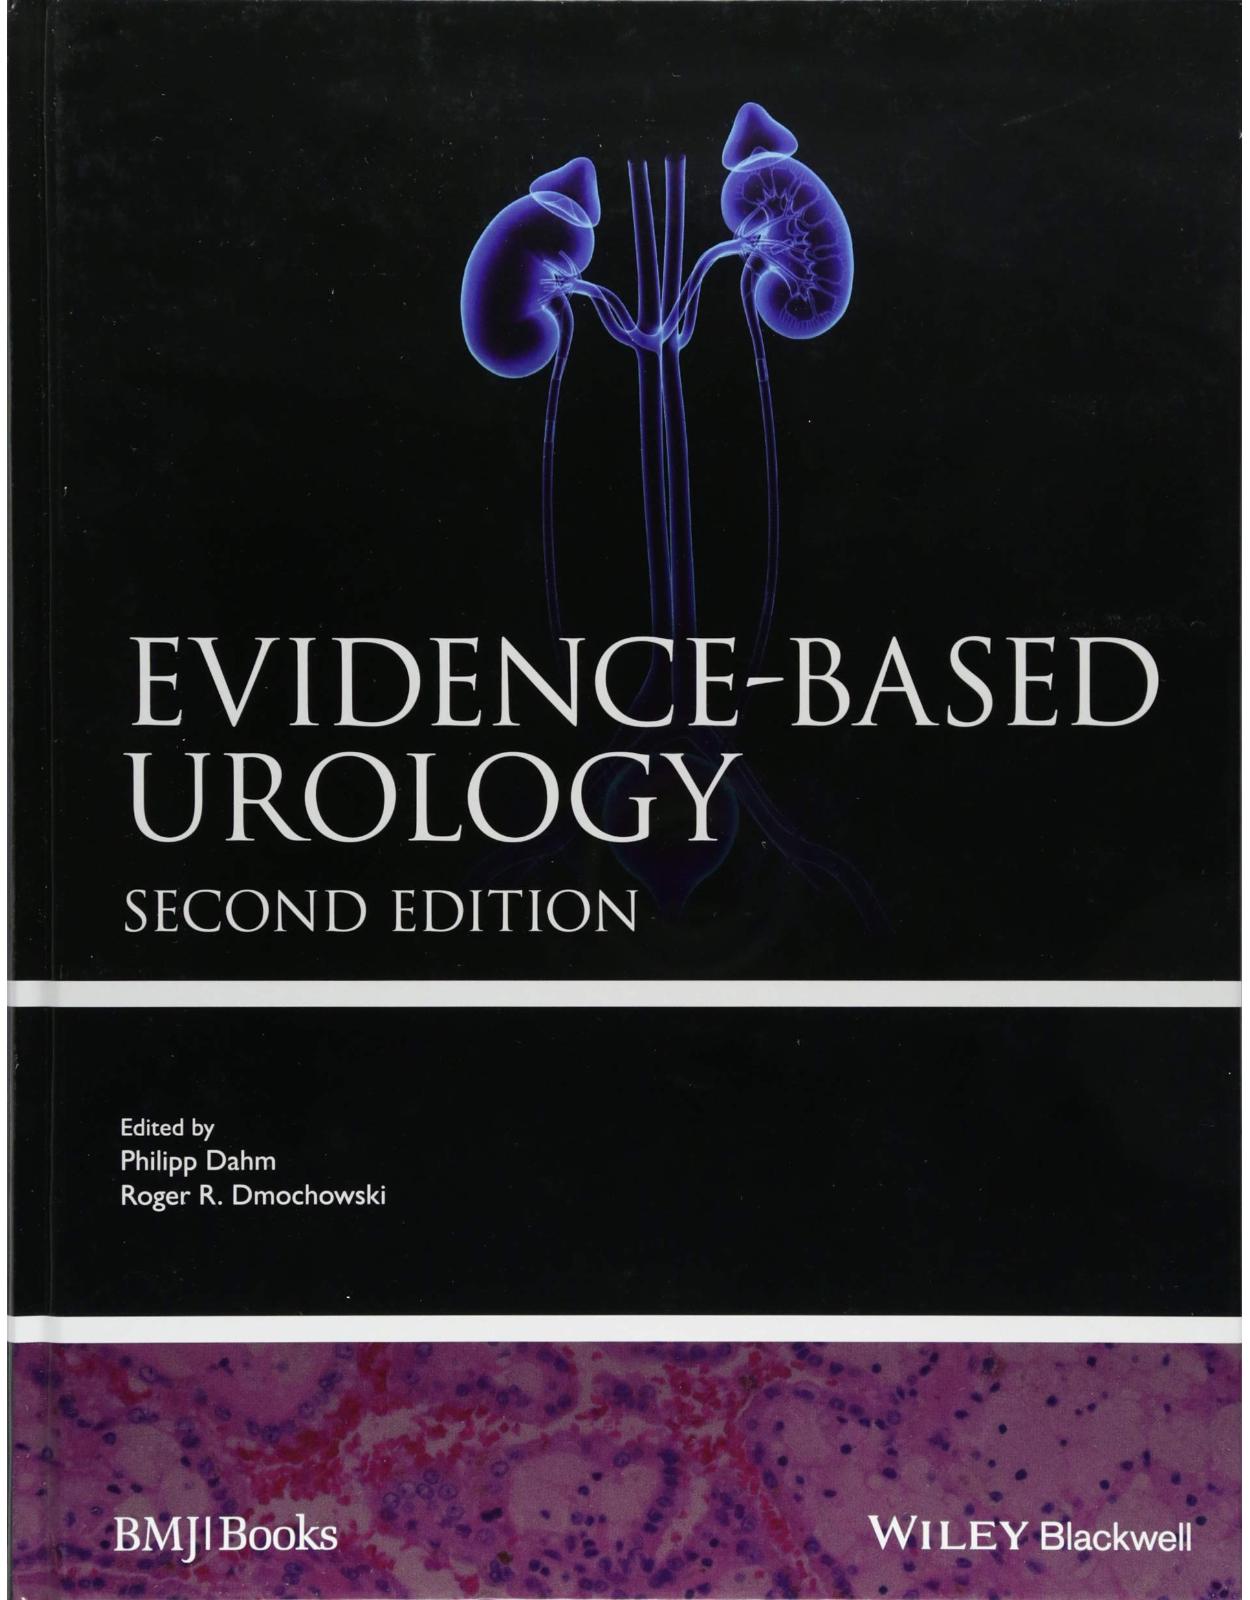 Evidence-based Urology